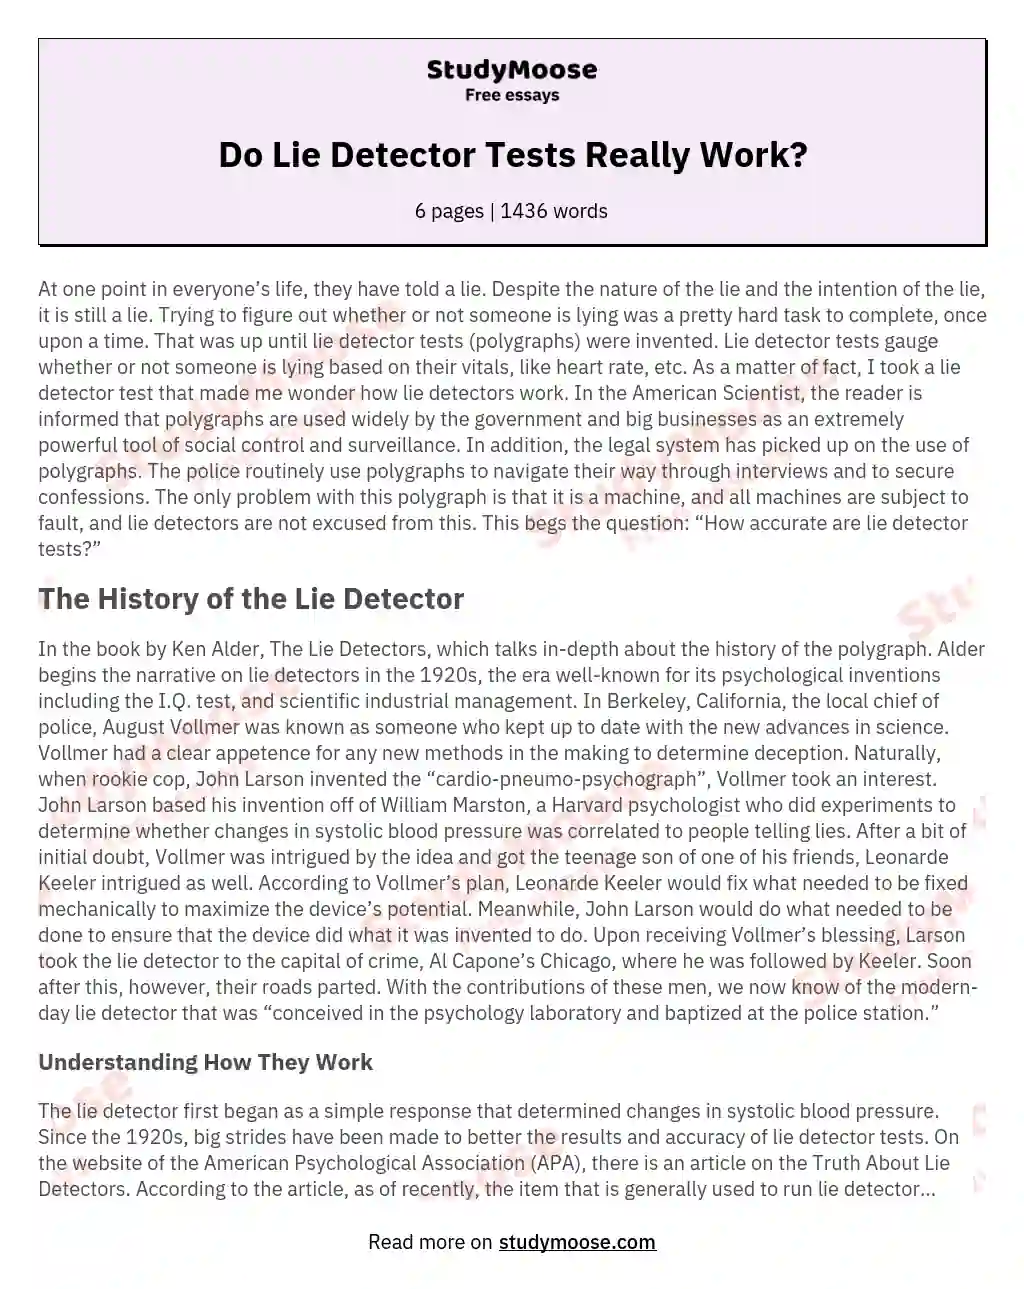 Do Lie Detector Tests Really Work?